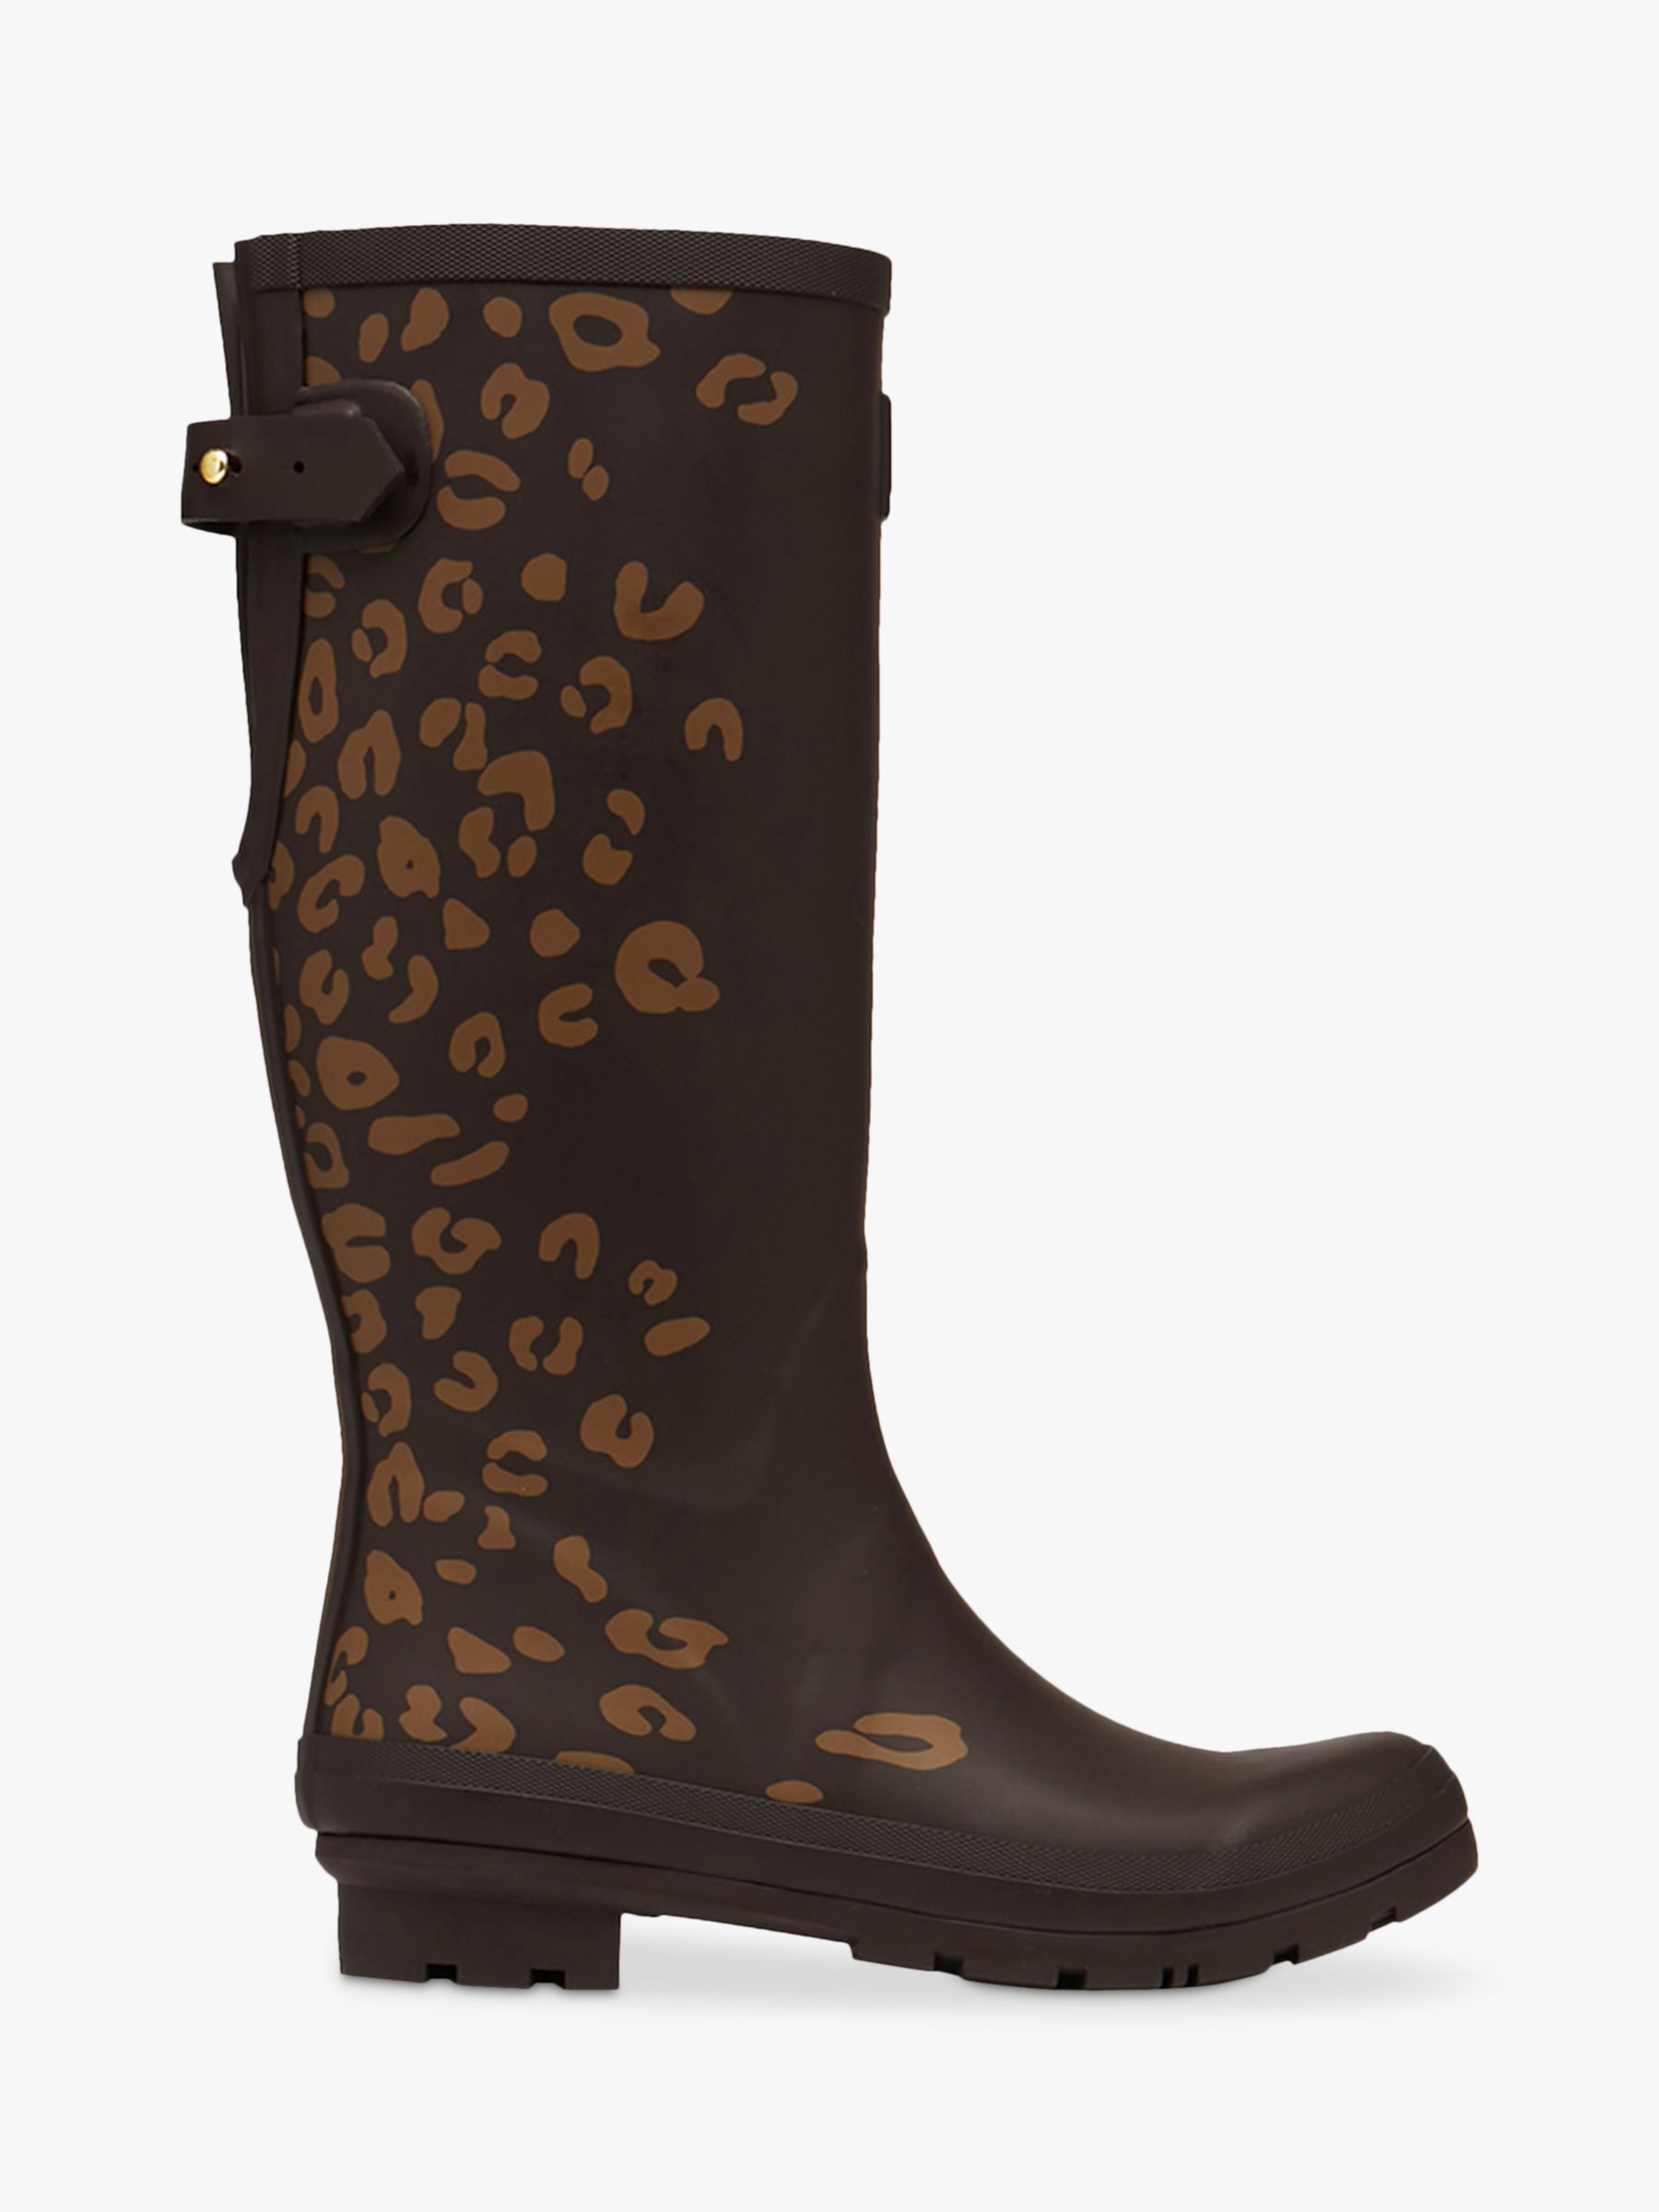 Joules Leopard Print Wellington Boots, Brown at John Lewis & Partners